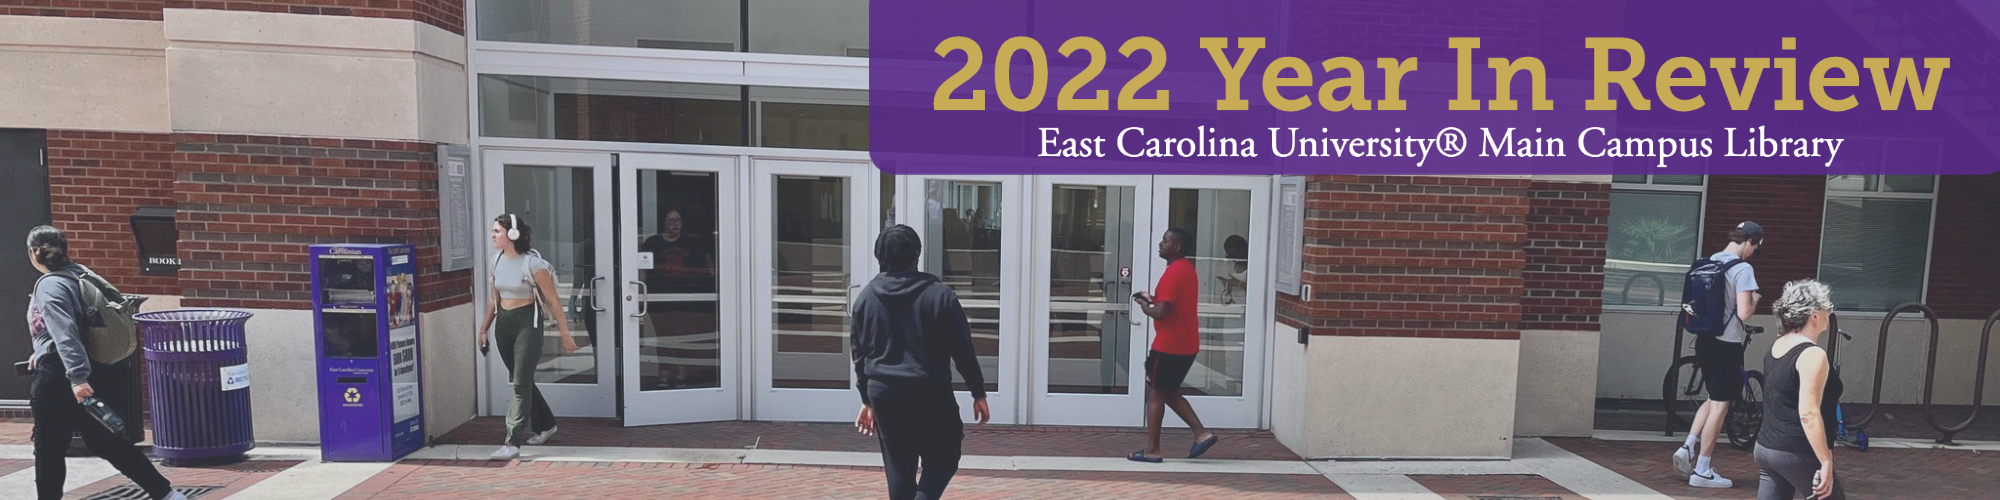 2022 Year in Review - East Carolina University Main Campus Library https://bit.ly/YIR2022LIB